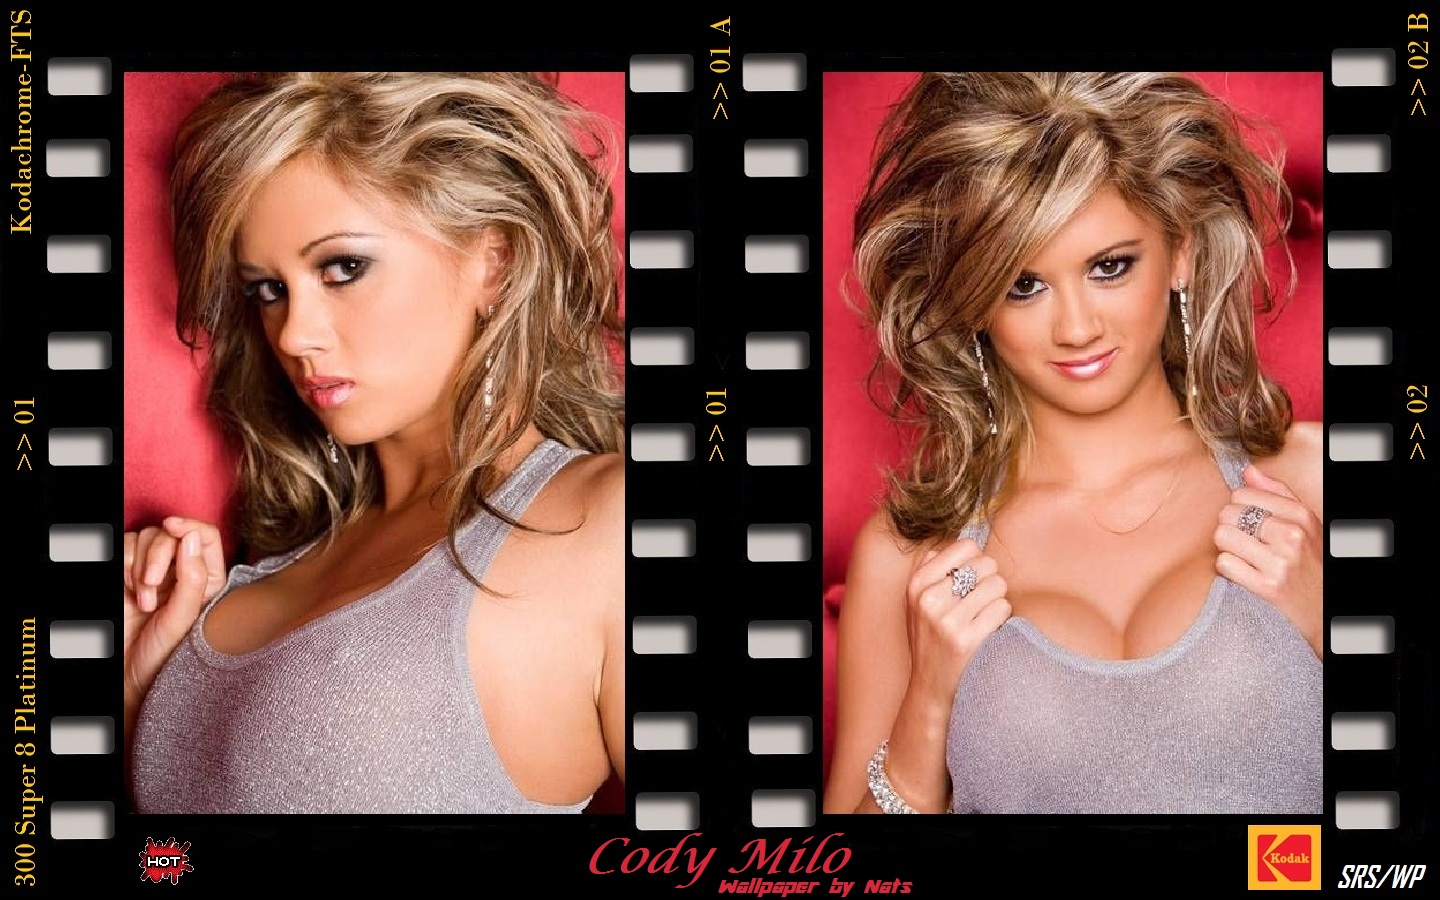 Download full size Cody Milo wallpaper / Celebrities Female / 1440x900